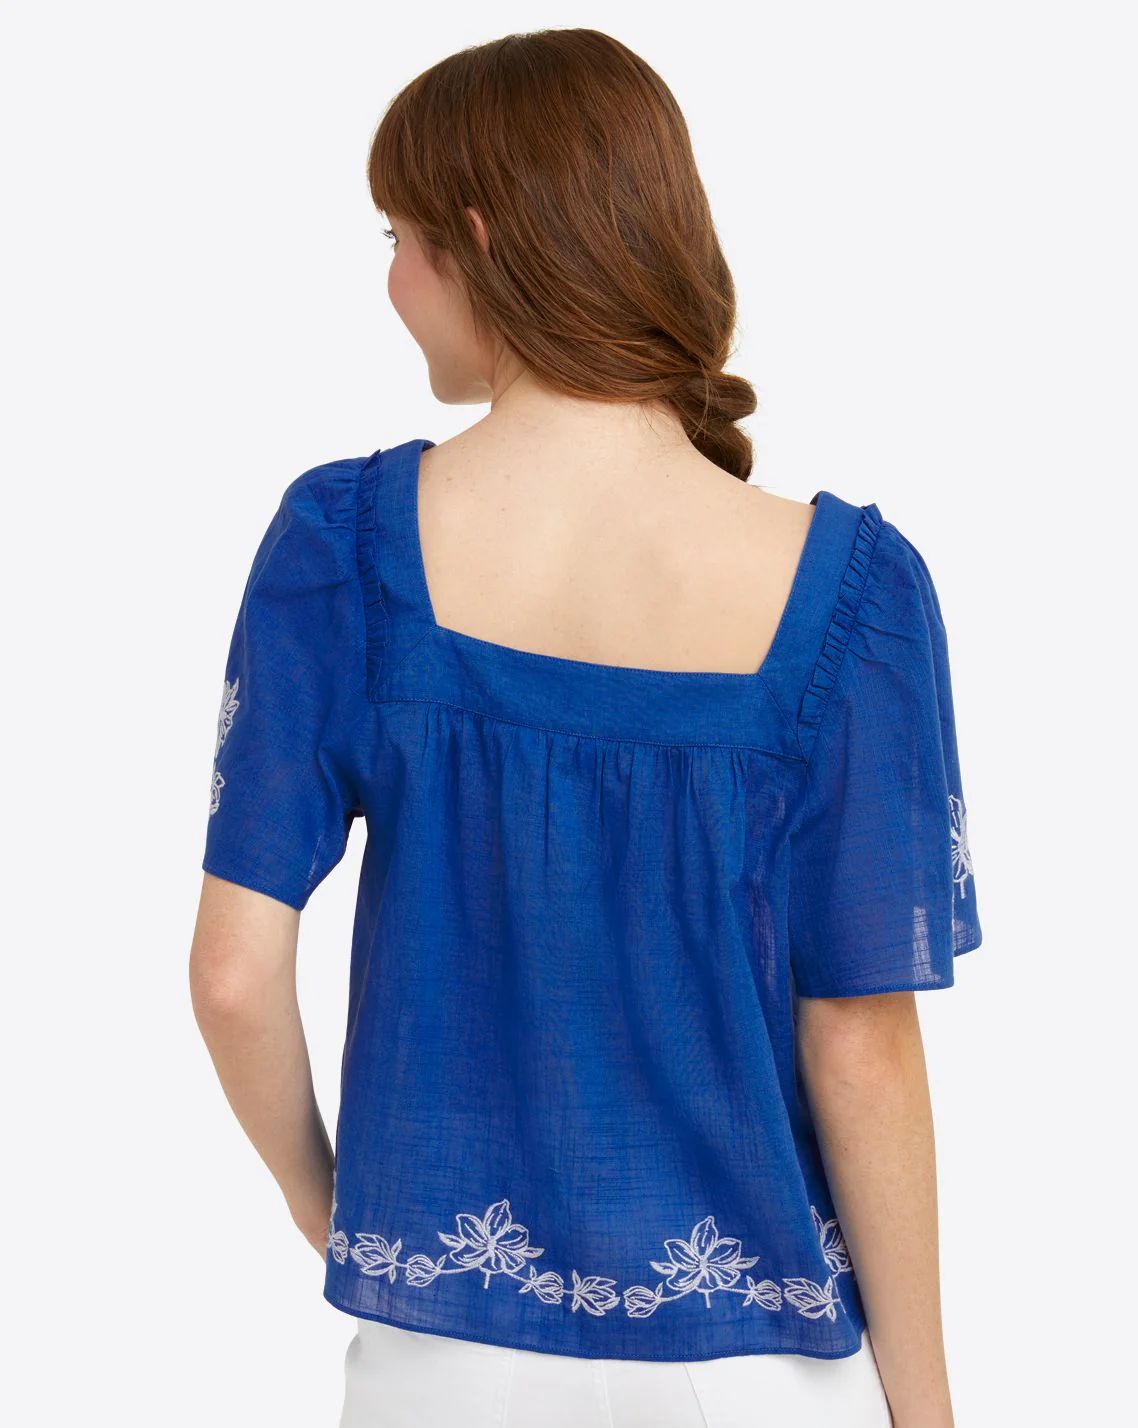 Maren Top in Blue Embroidered Floral | Draper James (US)